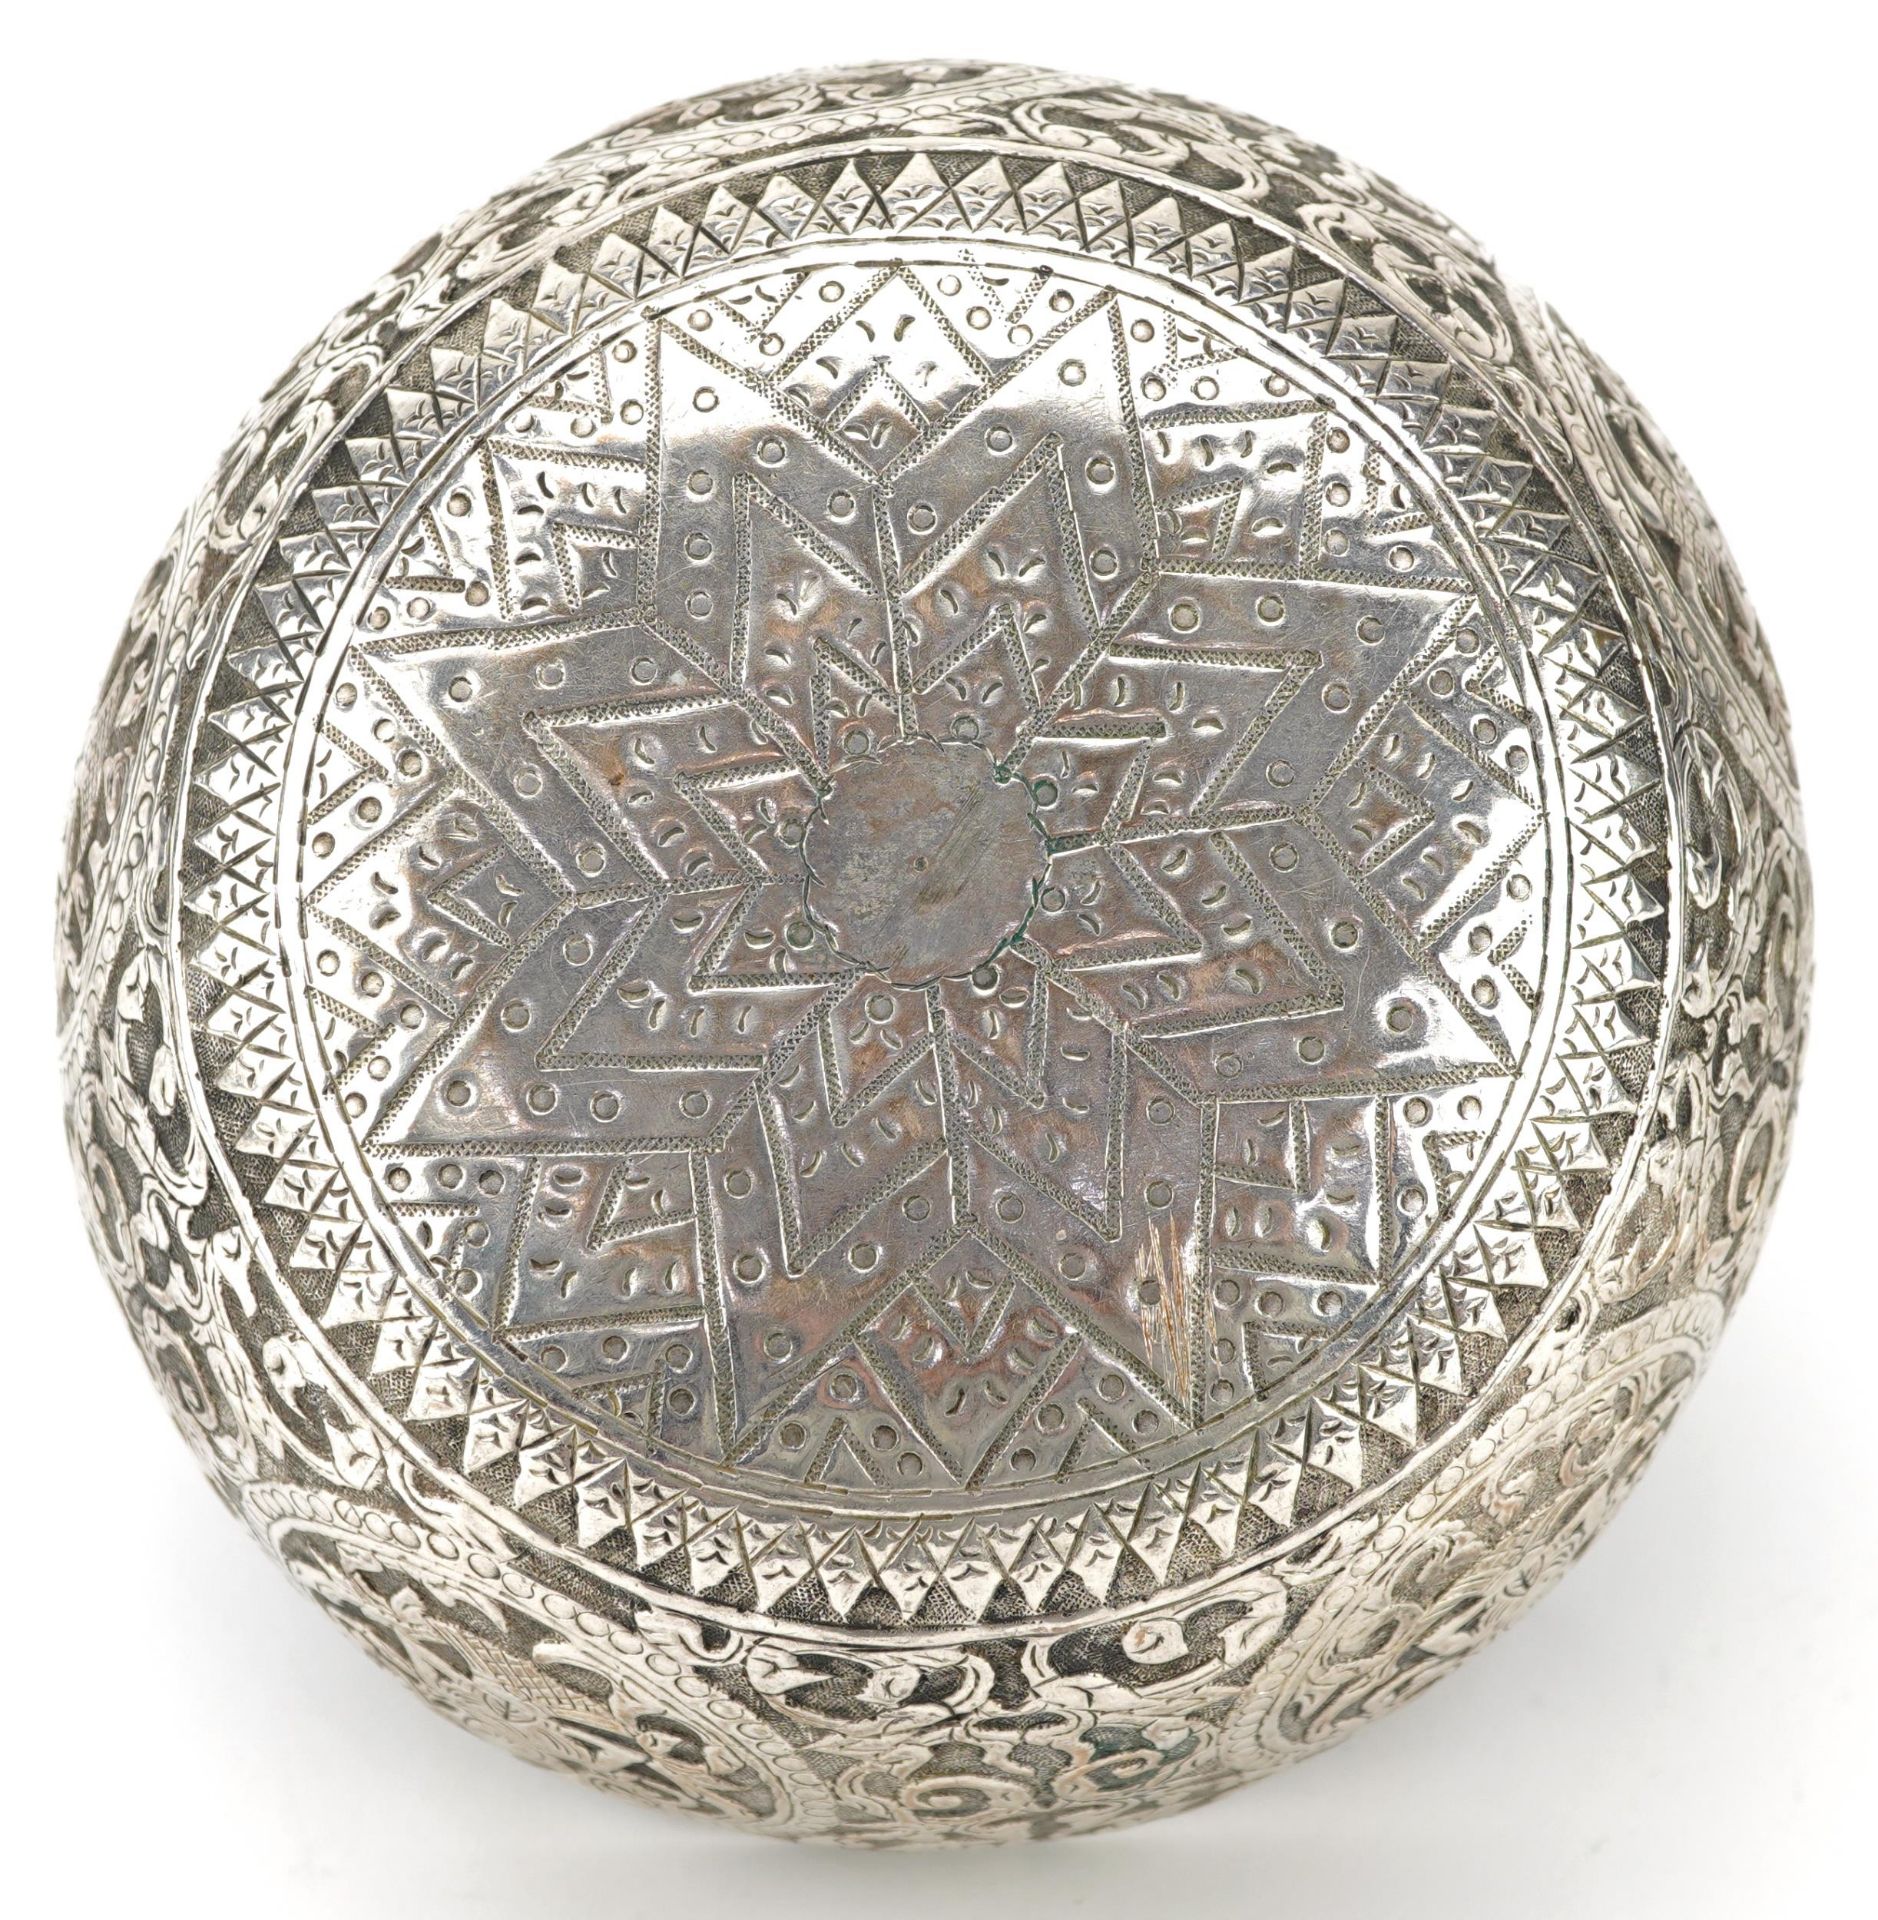 Tibetan white metal bowl embossed with deities, 15.5cm in diameter, 171.0g - Image 5 of 6